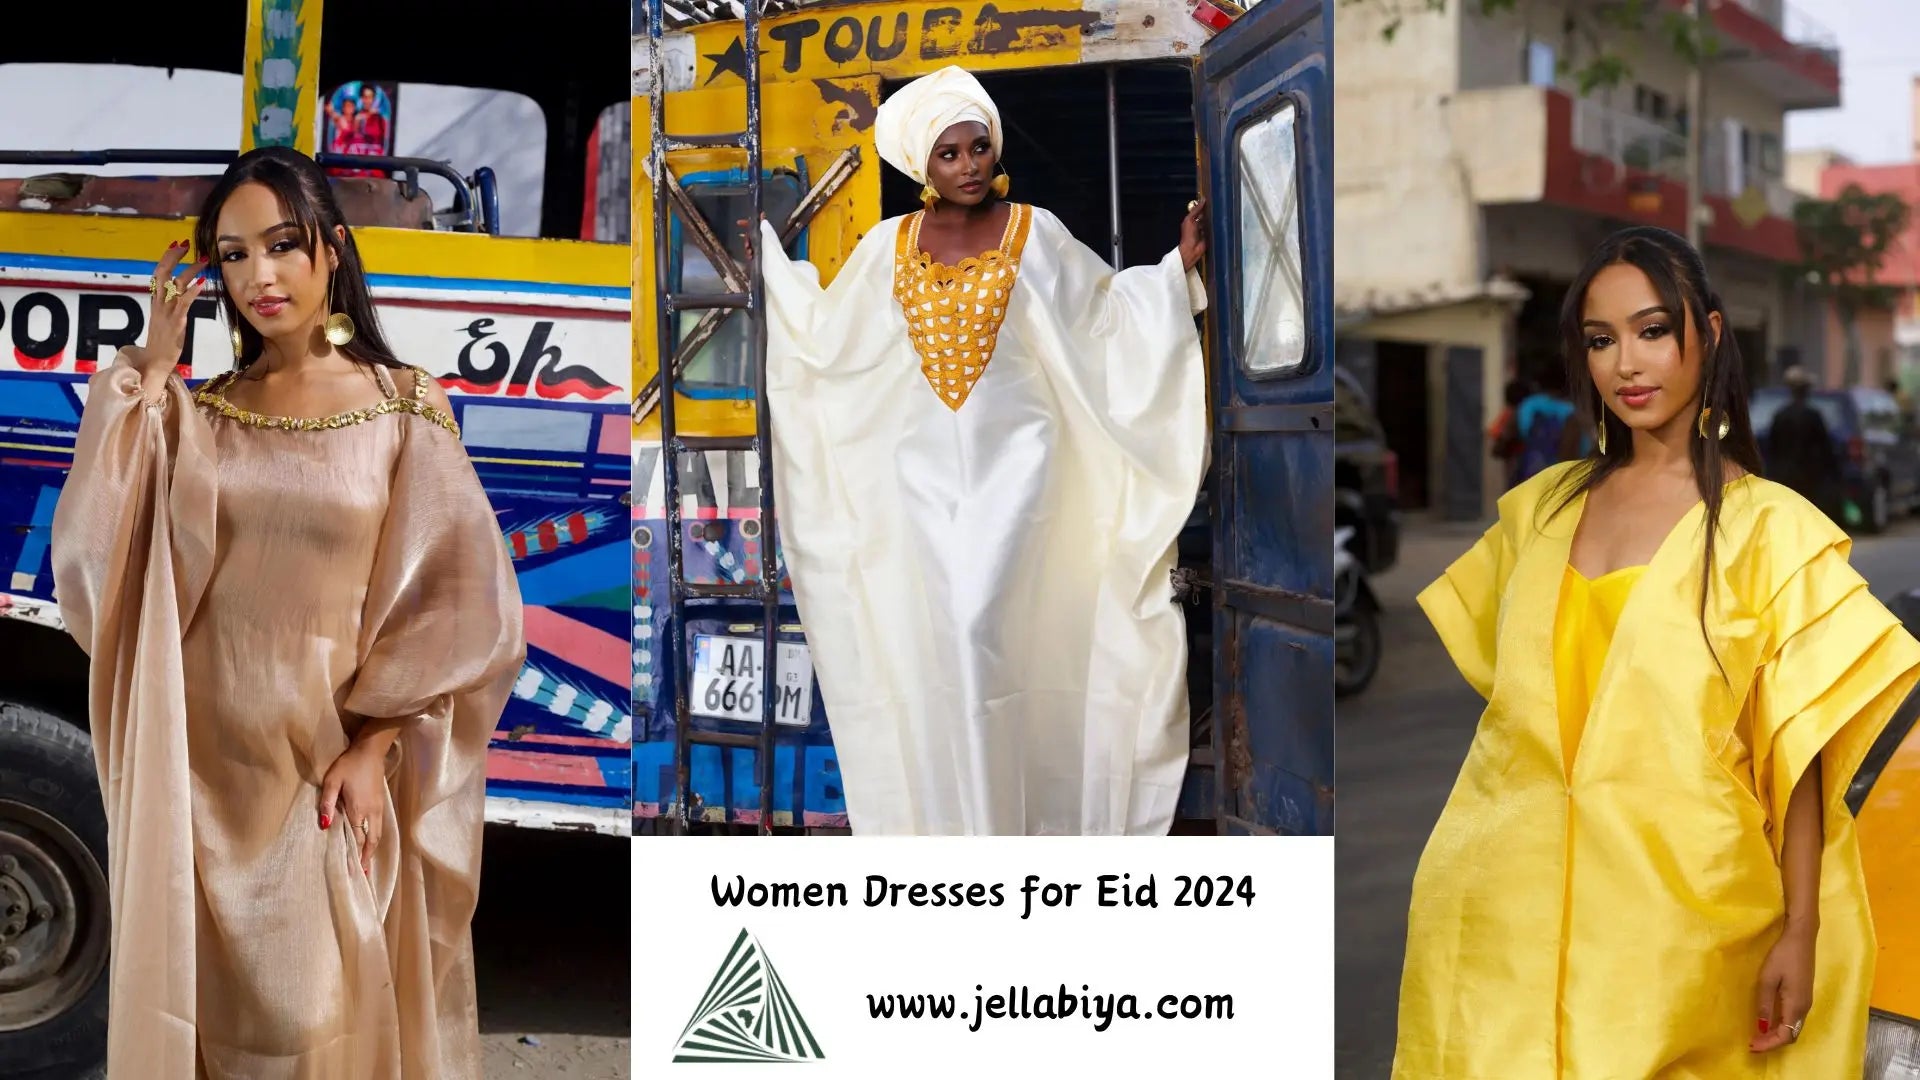 Women Dresses for Eid 2024 at Jellabiya